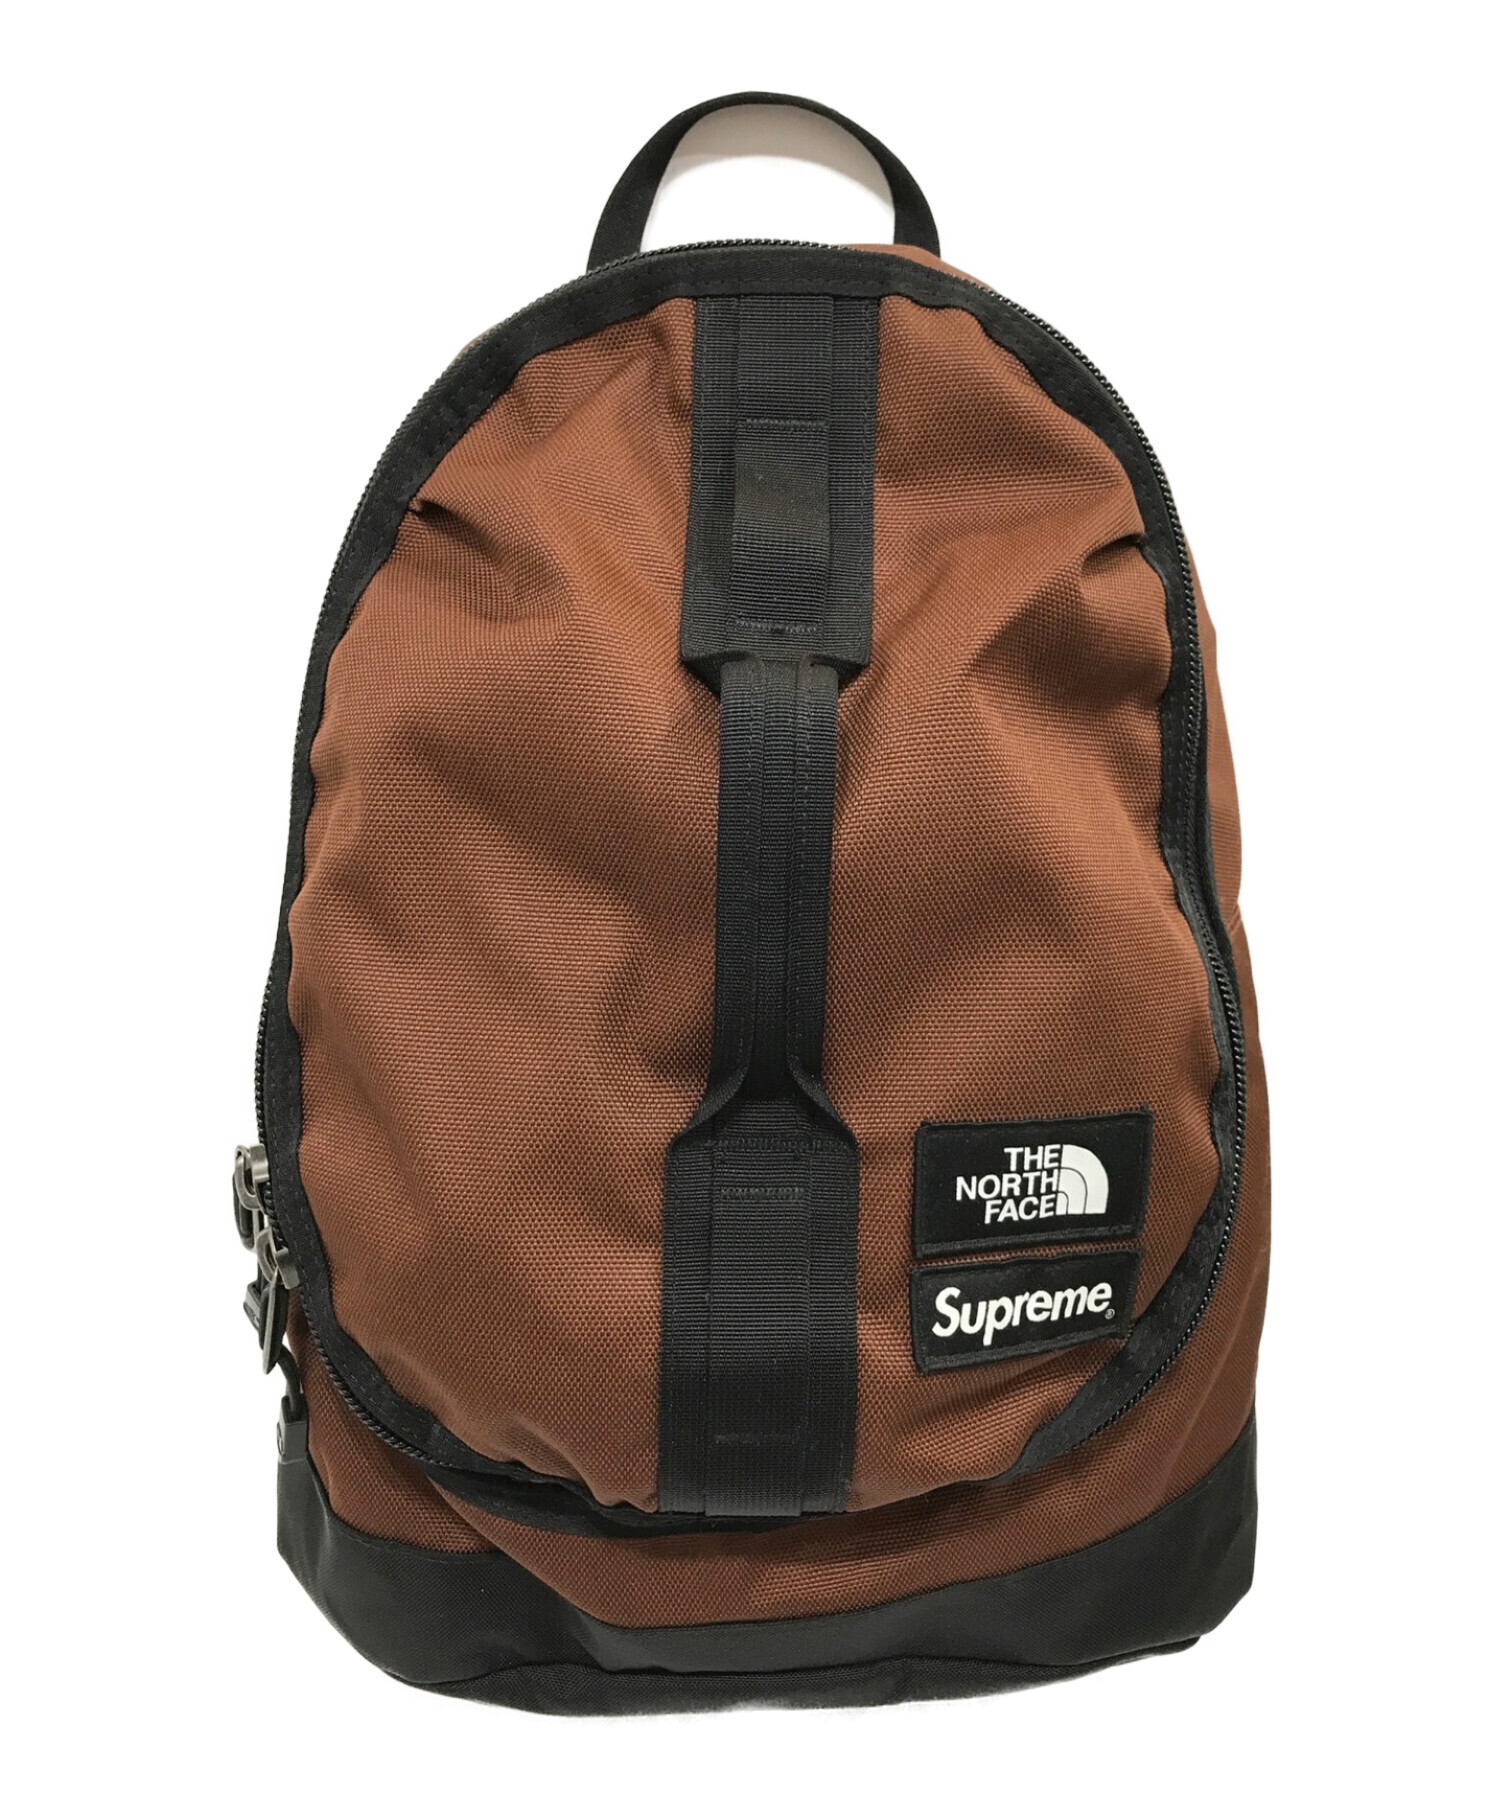 THE NORTH FACE (ザ ノース フェイス) Supreme (シュプリーム) SteepTech Backpack ブラウン